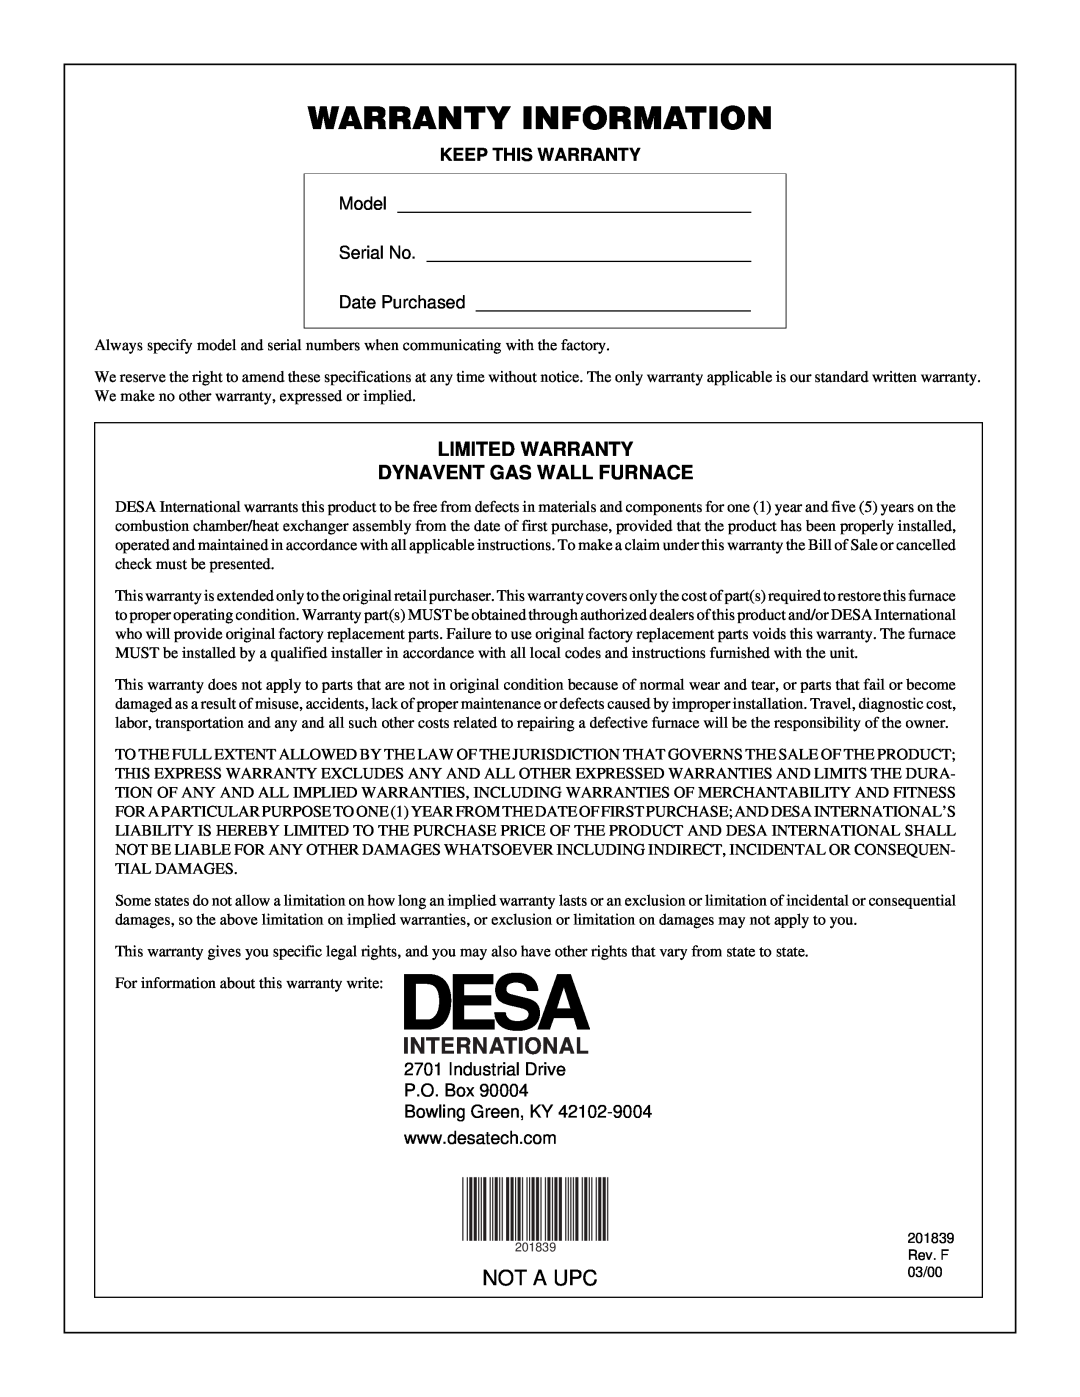 Desa DNV25PB, DNV40PB Warranty Information, International, Not A Upc, Limited Warranty Dynavent Gas Wall Furnace 